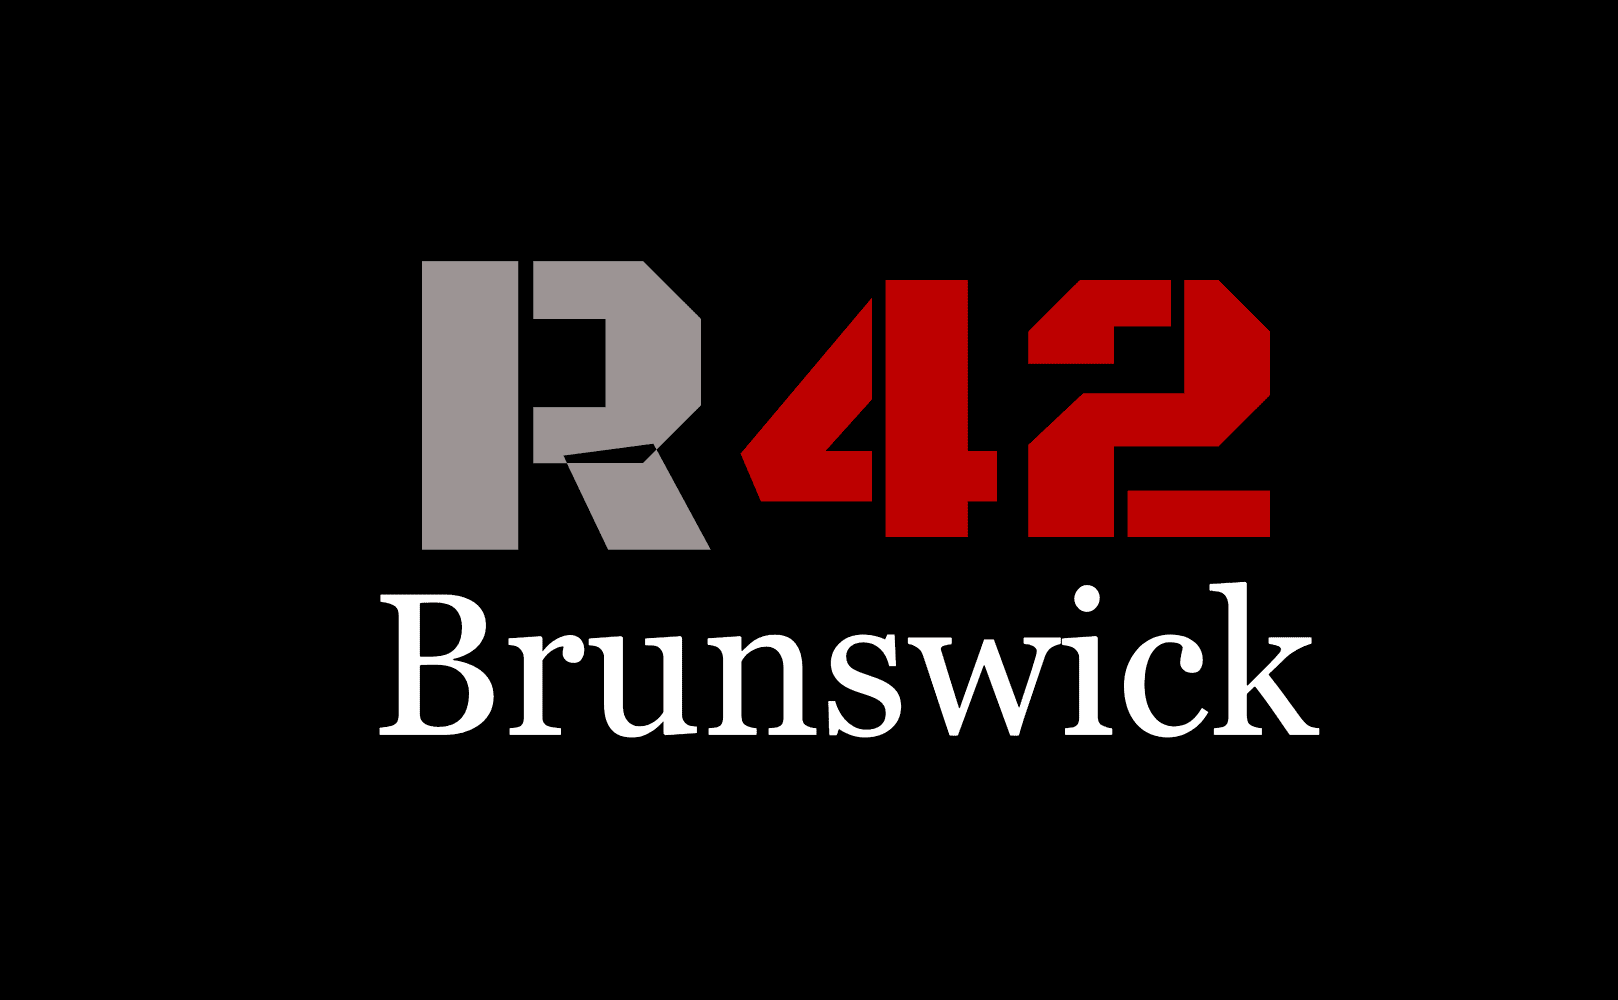 Range 42 Brunswick